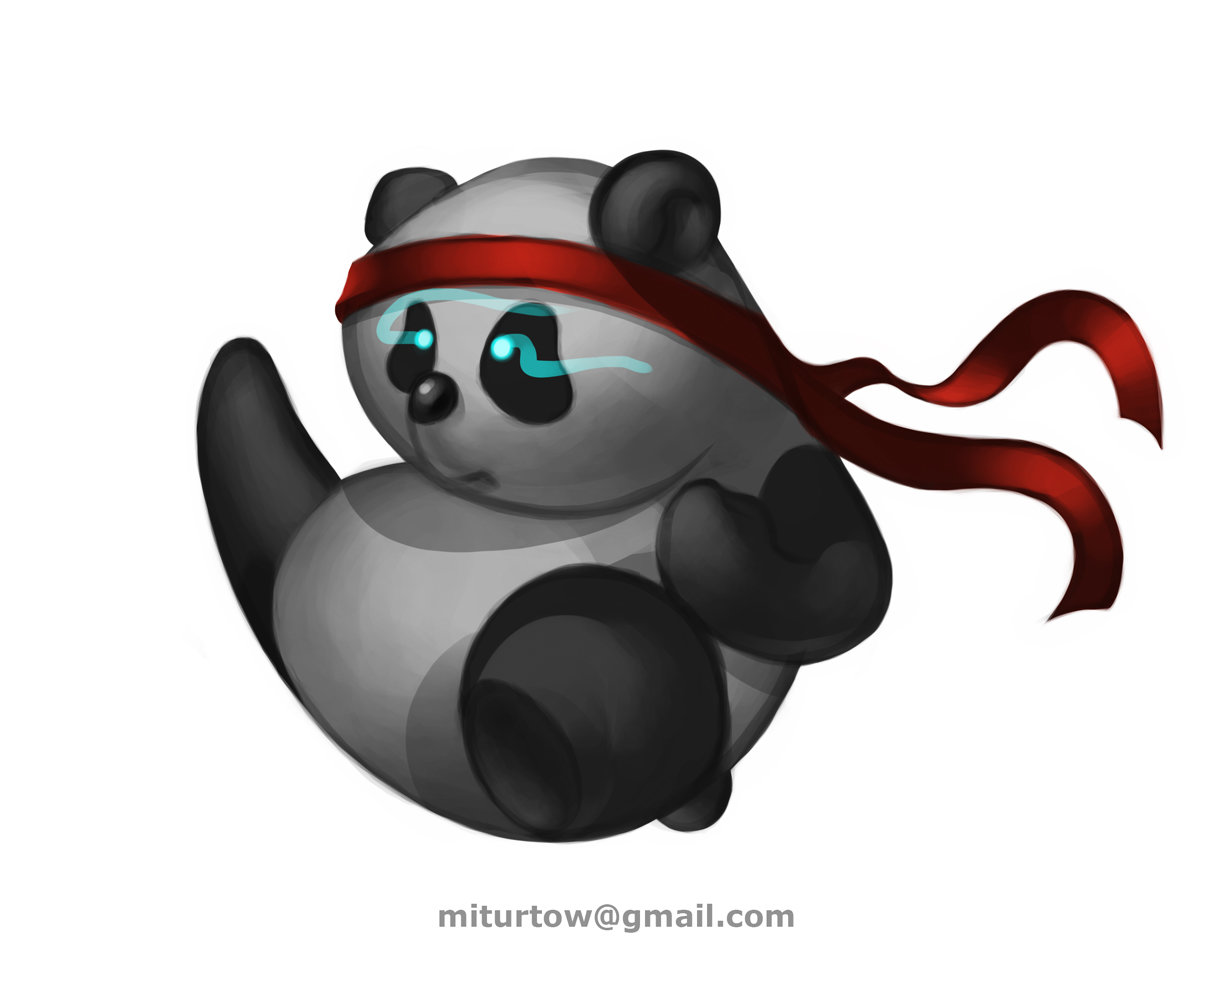 ArtStation - Ninja panda